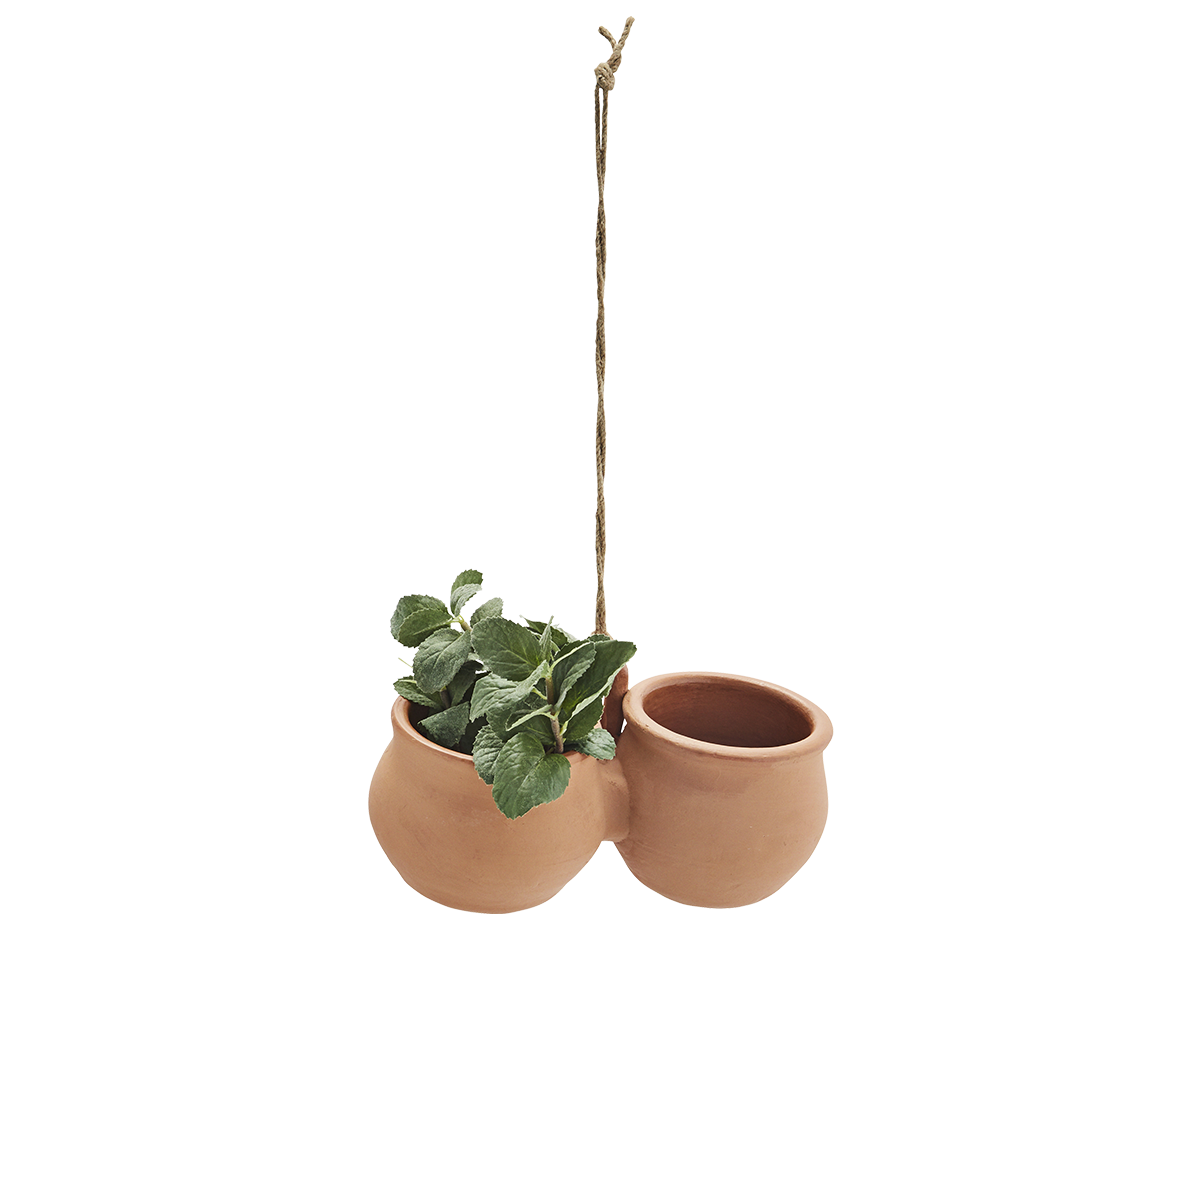 Hanging terracotta flower pots